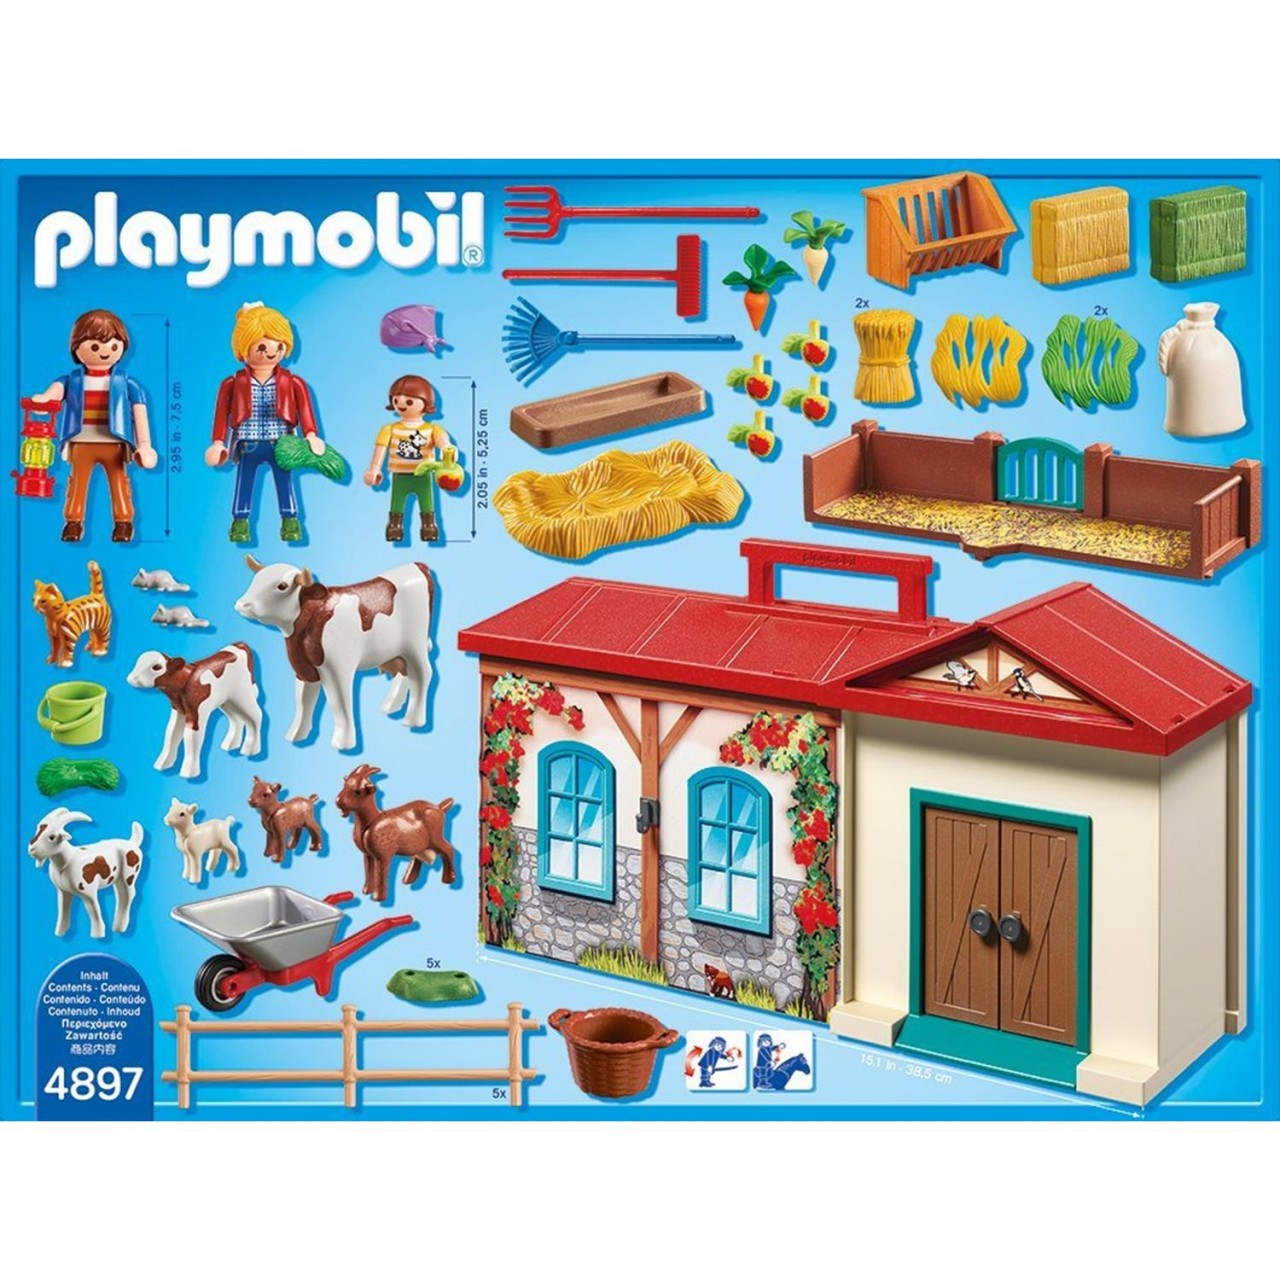 Playmobil 4897 Mitnehm-Bauernhof